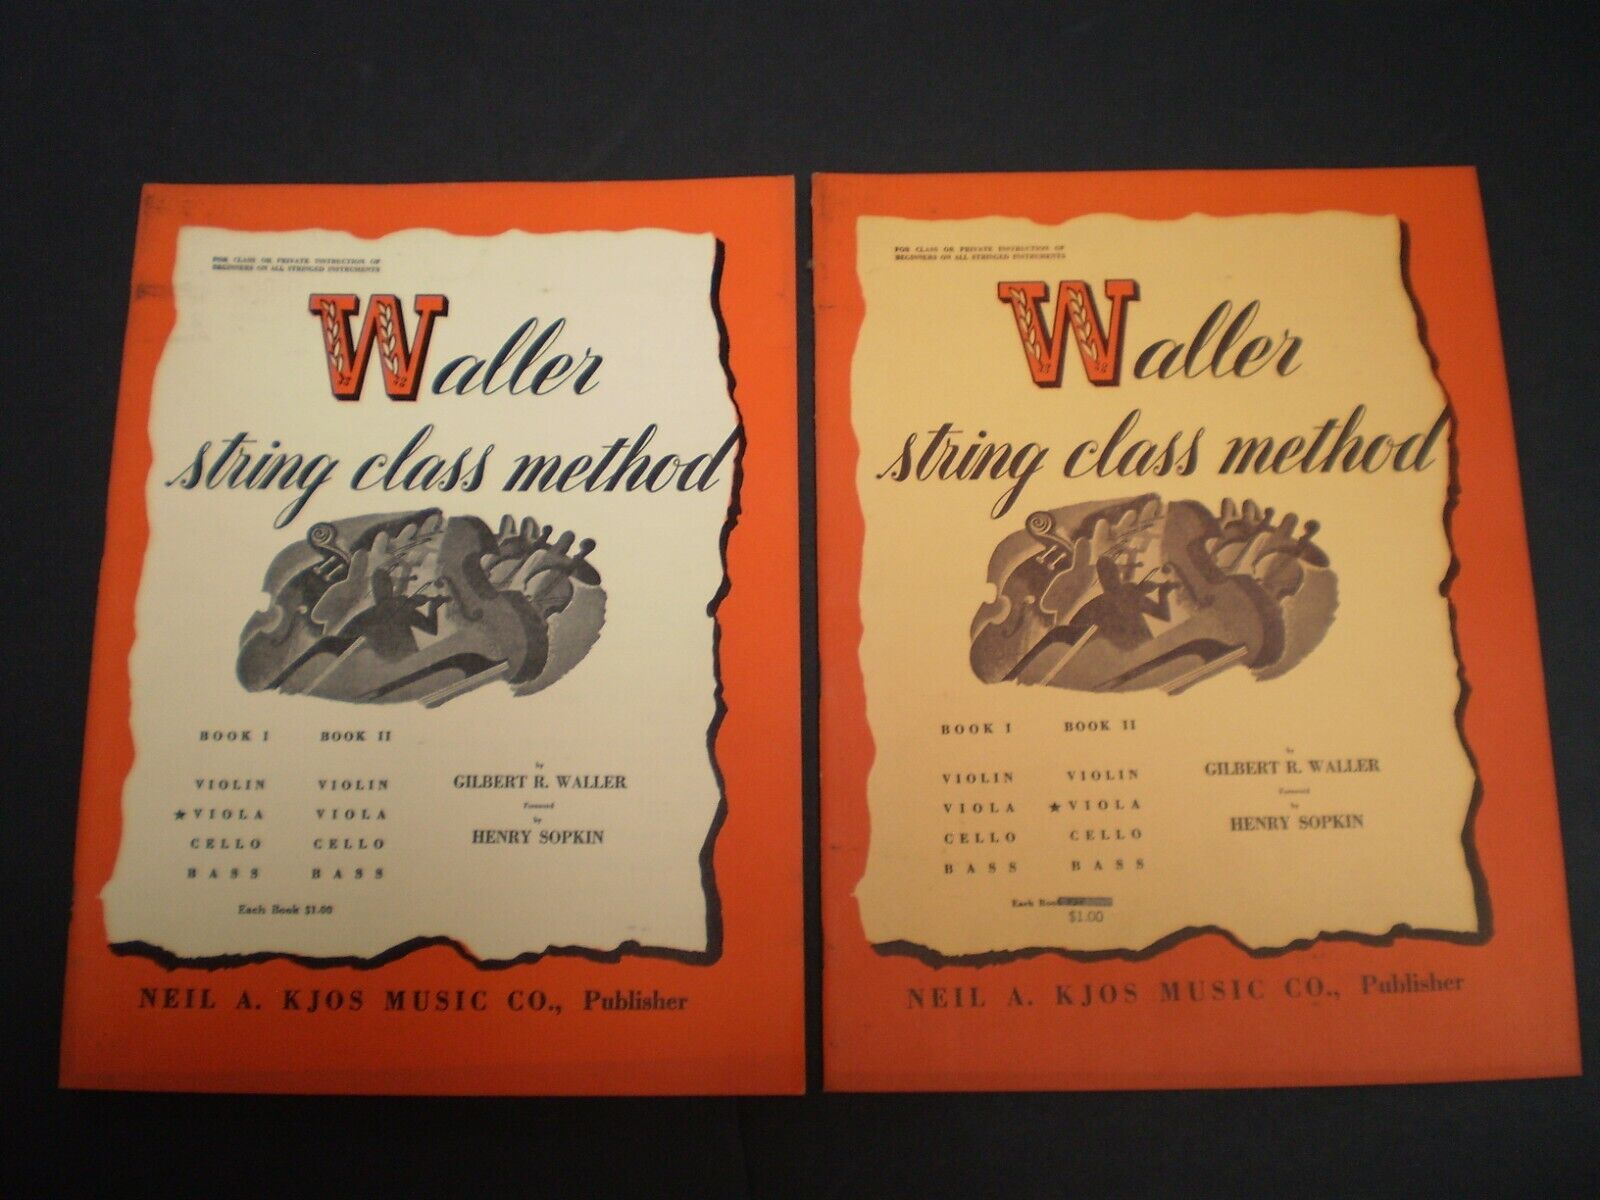 Lot of 2 Vintage WALLER STRING CLASS METHOD Sheet Music, Viola, Books 1,2 (1941) Без бренда